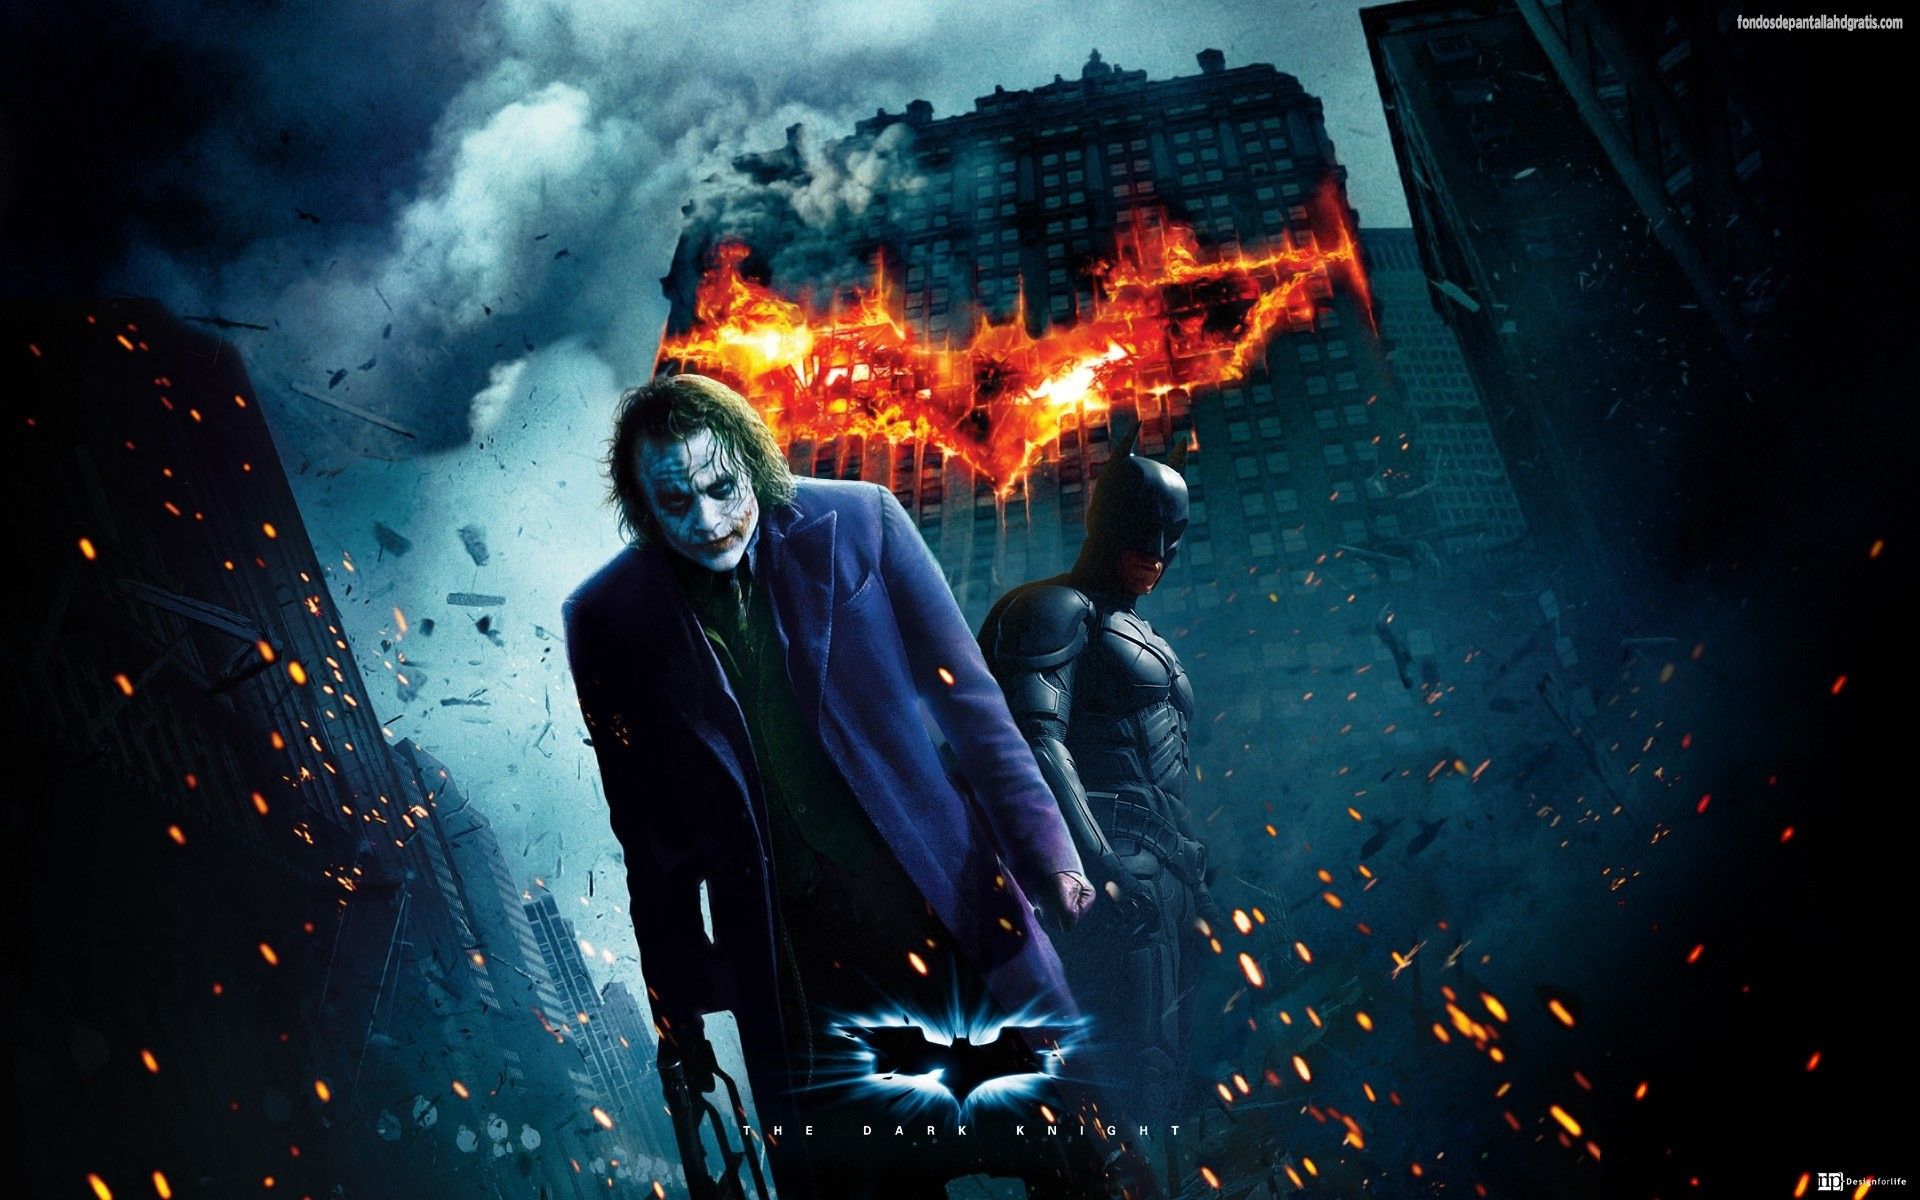 The Joker The Dark Knight Desktop Wallpaper Hd For Mobile Phones And  Laptops 3840x2160  Wallpapers13com